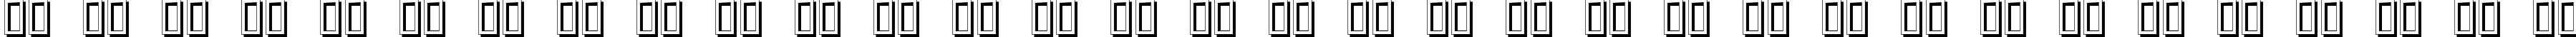 Пример написания русского алфавита шрифтом Nubian Shadow